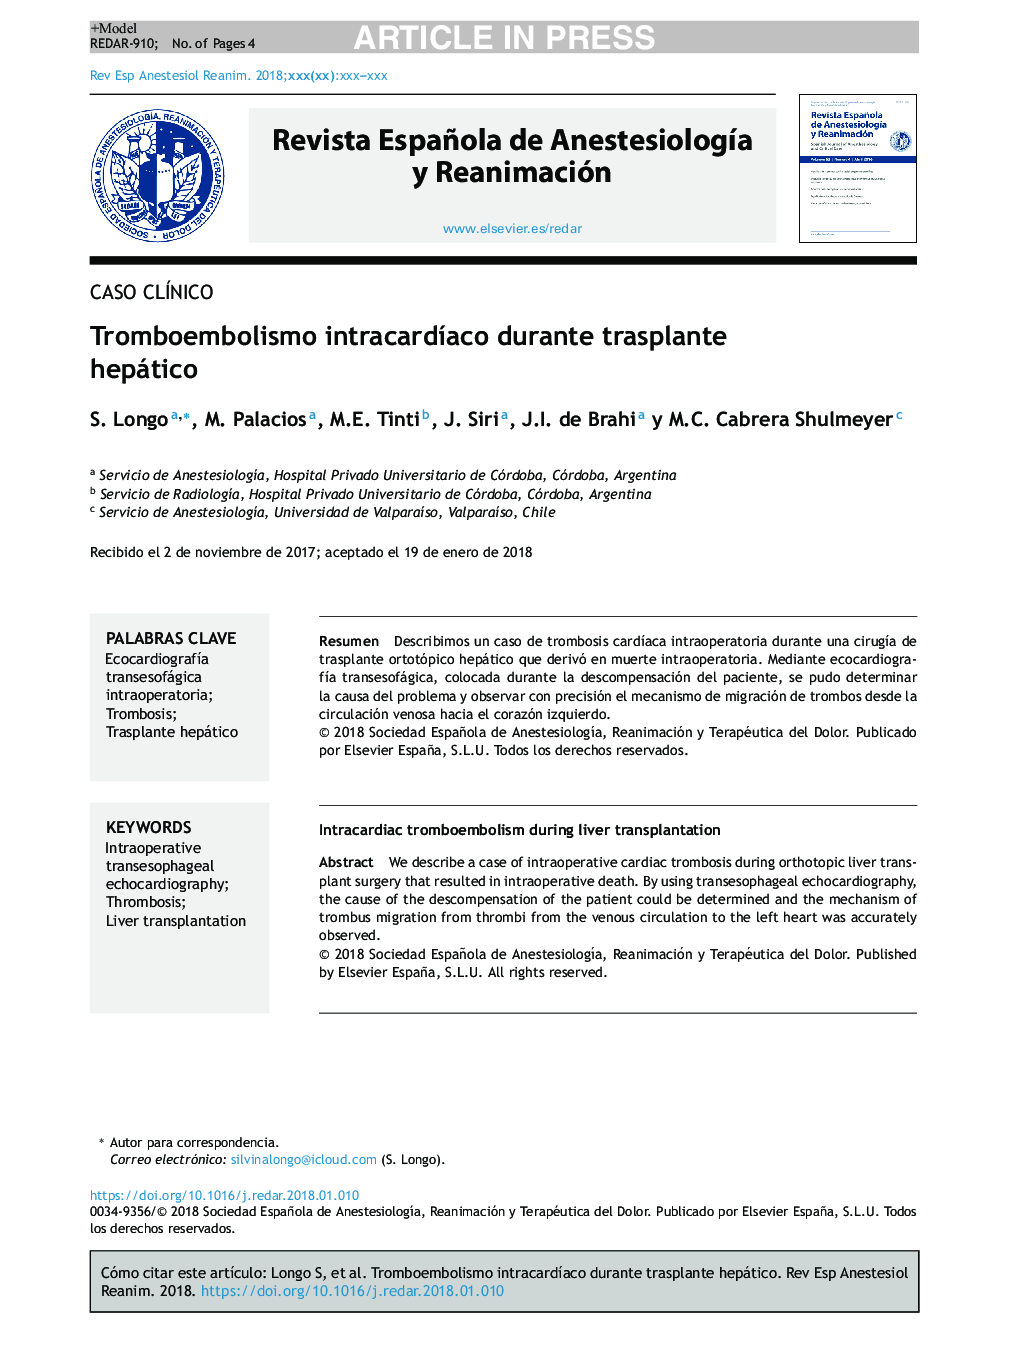 Tromboembolismo intracardÃ­aco durante trasplante hepático